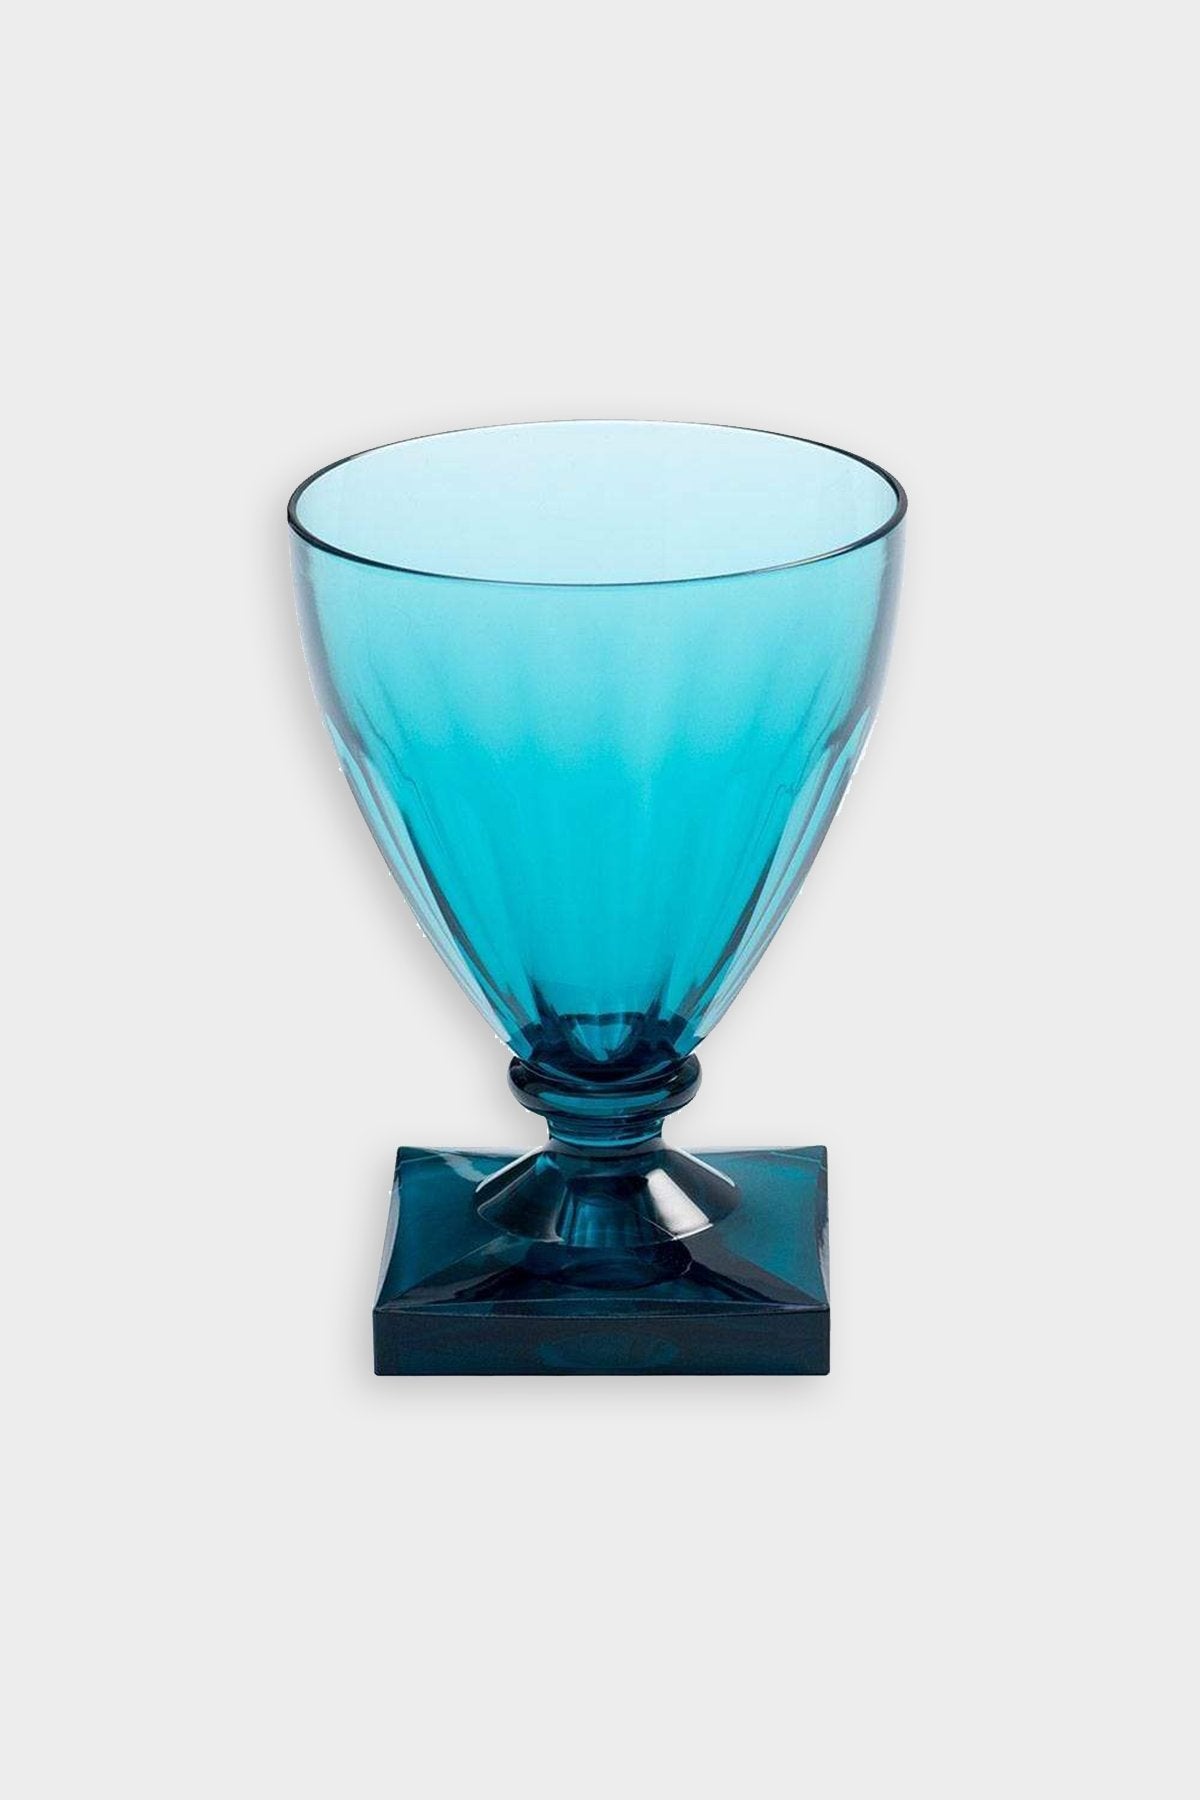 Acrylic 8.5oz Wine Goblet in Turquoise - shop-olivia.com